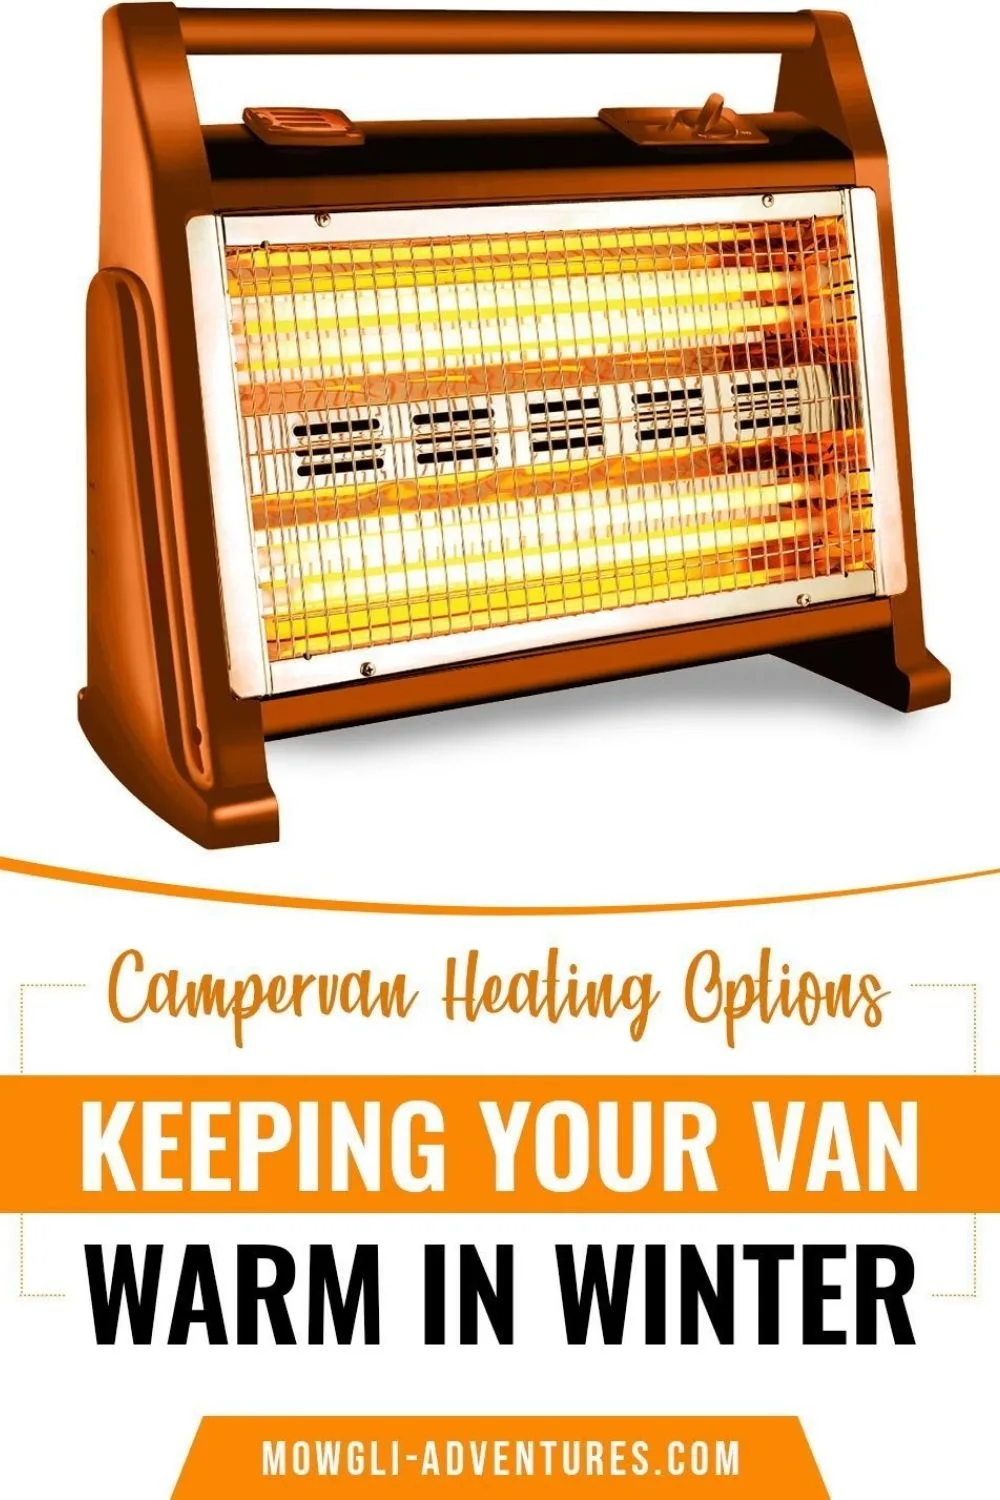 campervan heating options for winter rv living on pinterest